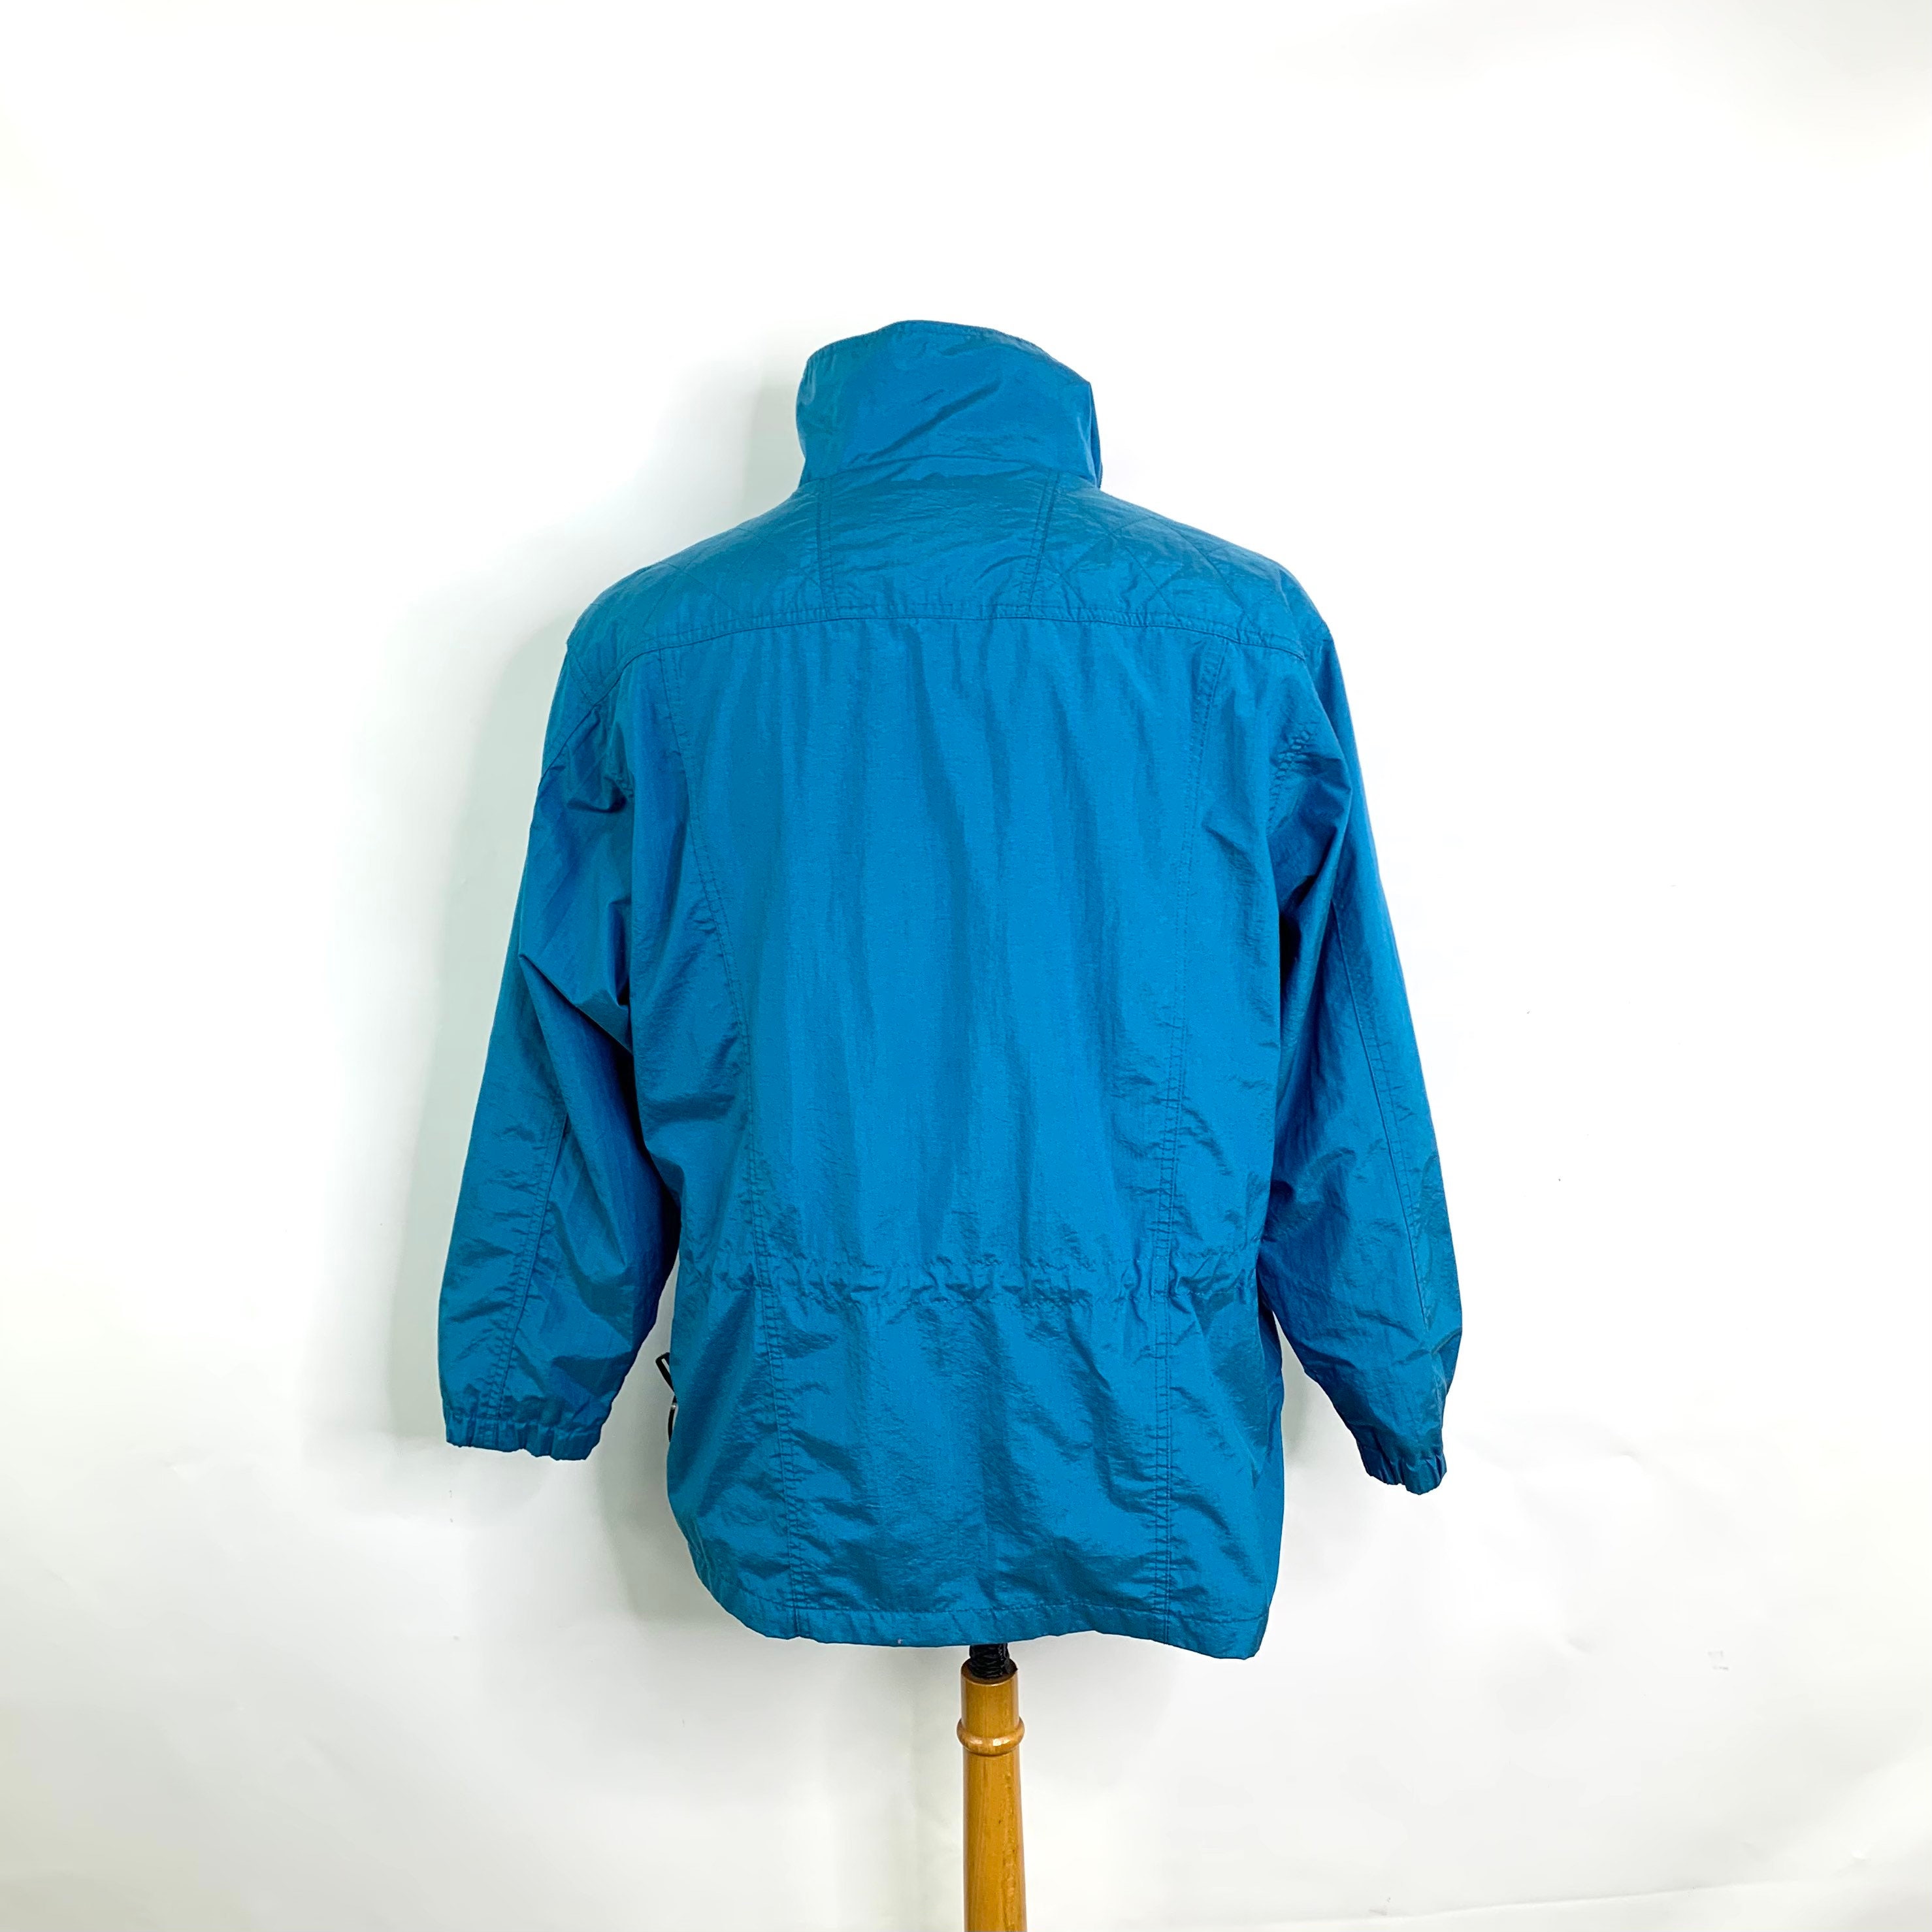 Vintage blue windbreaker jacket oversize bright colored anorak | Etsy